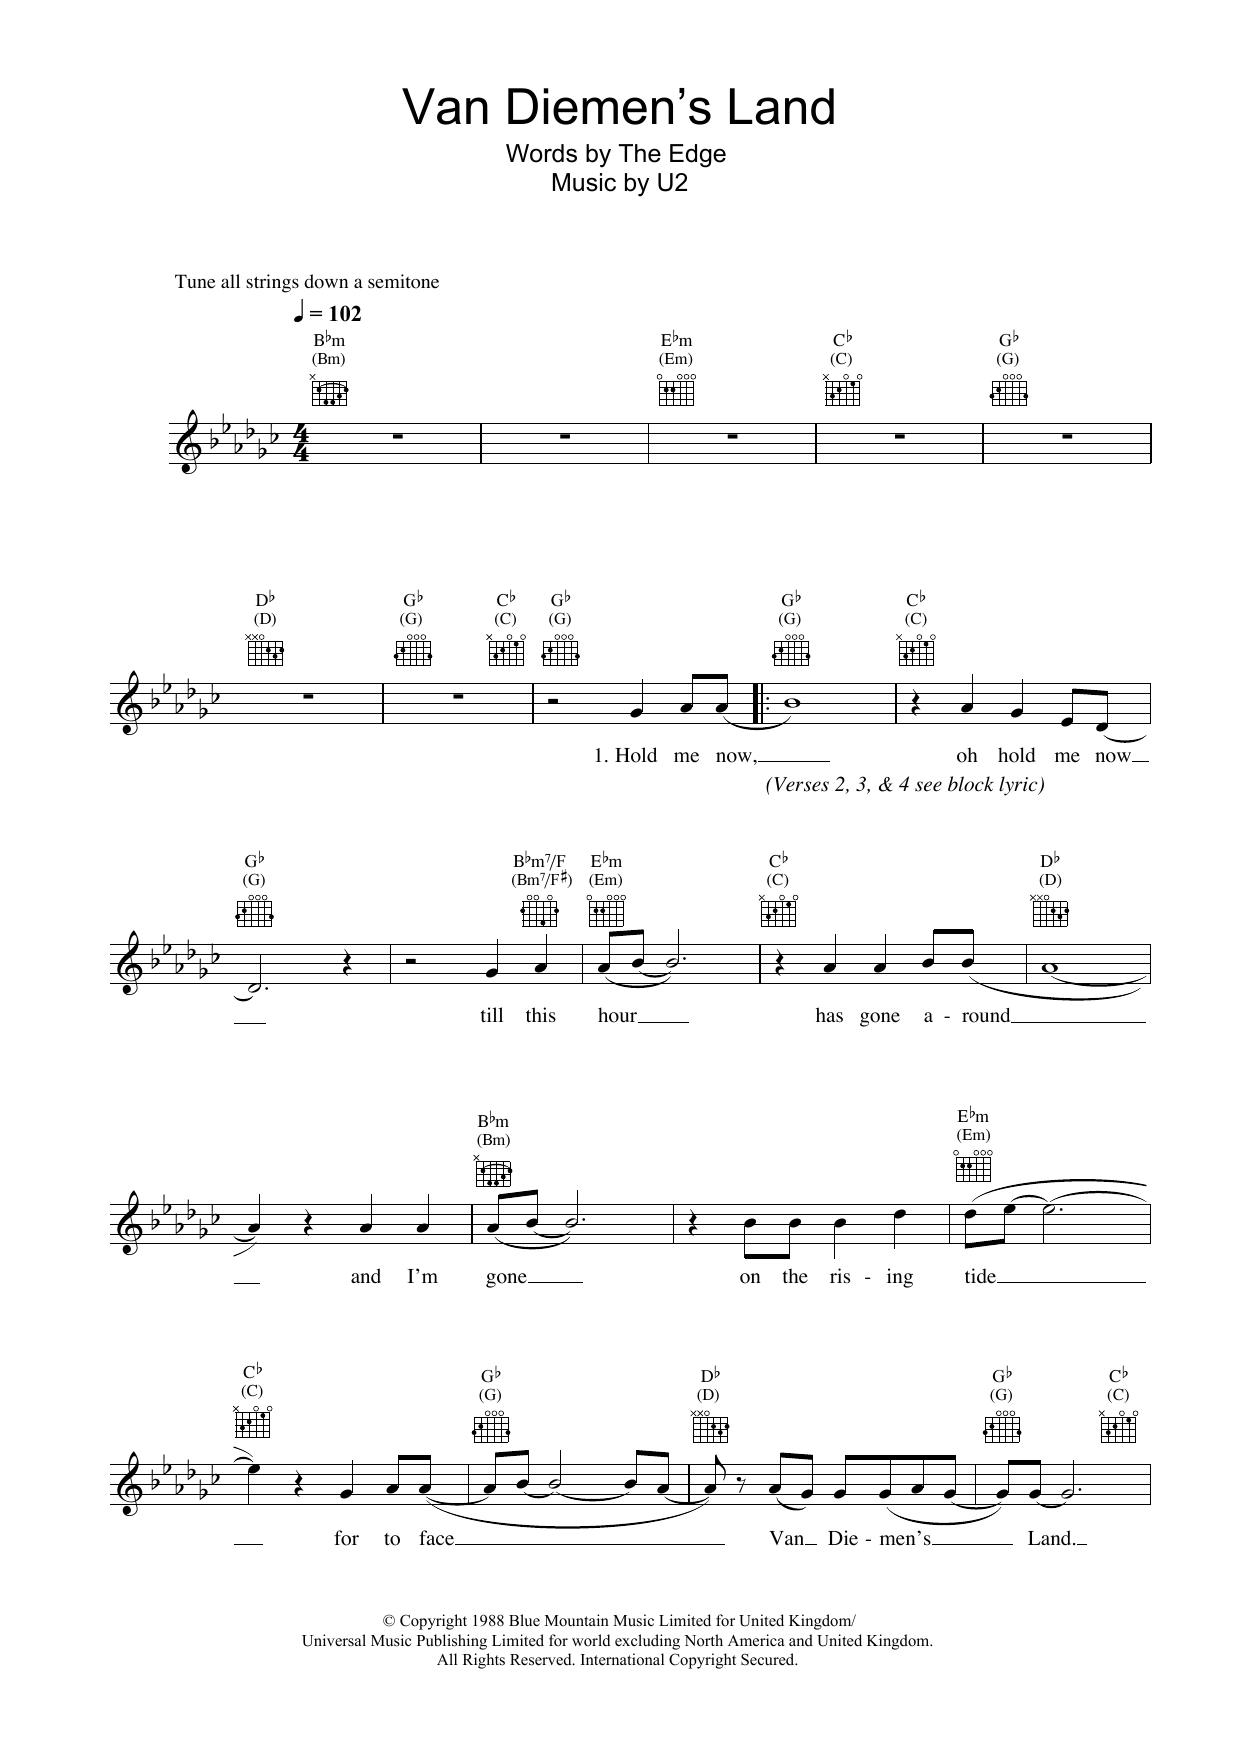 Download U2 Van Diemen's Land Sheet Music and learn how to play Melody Line, Lyrics & Chords PDF digital score in minutes